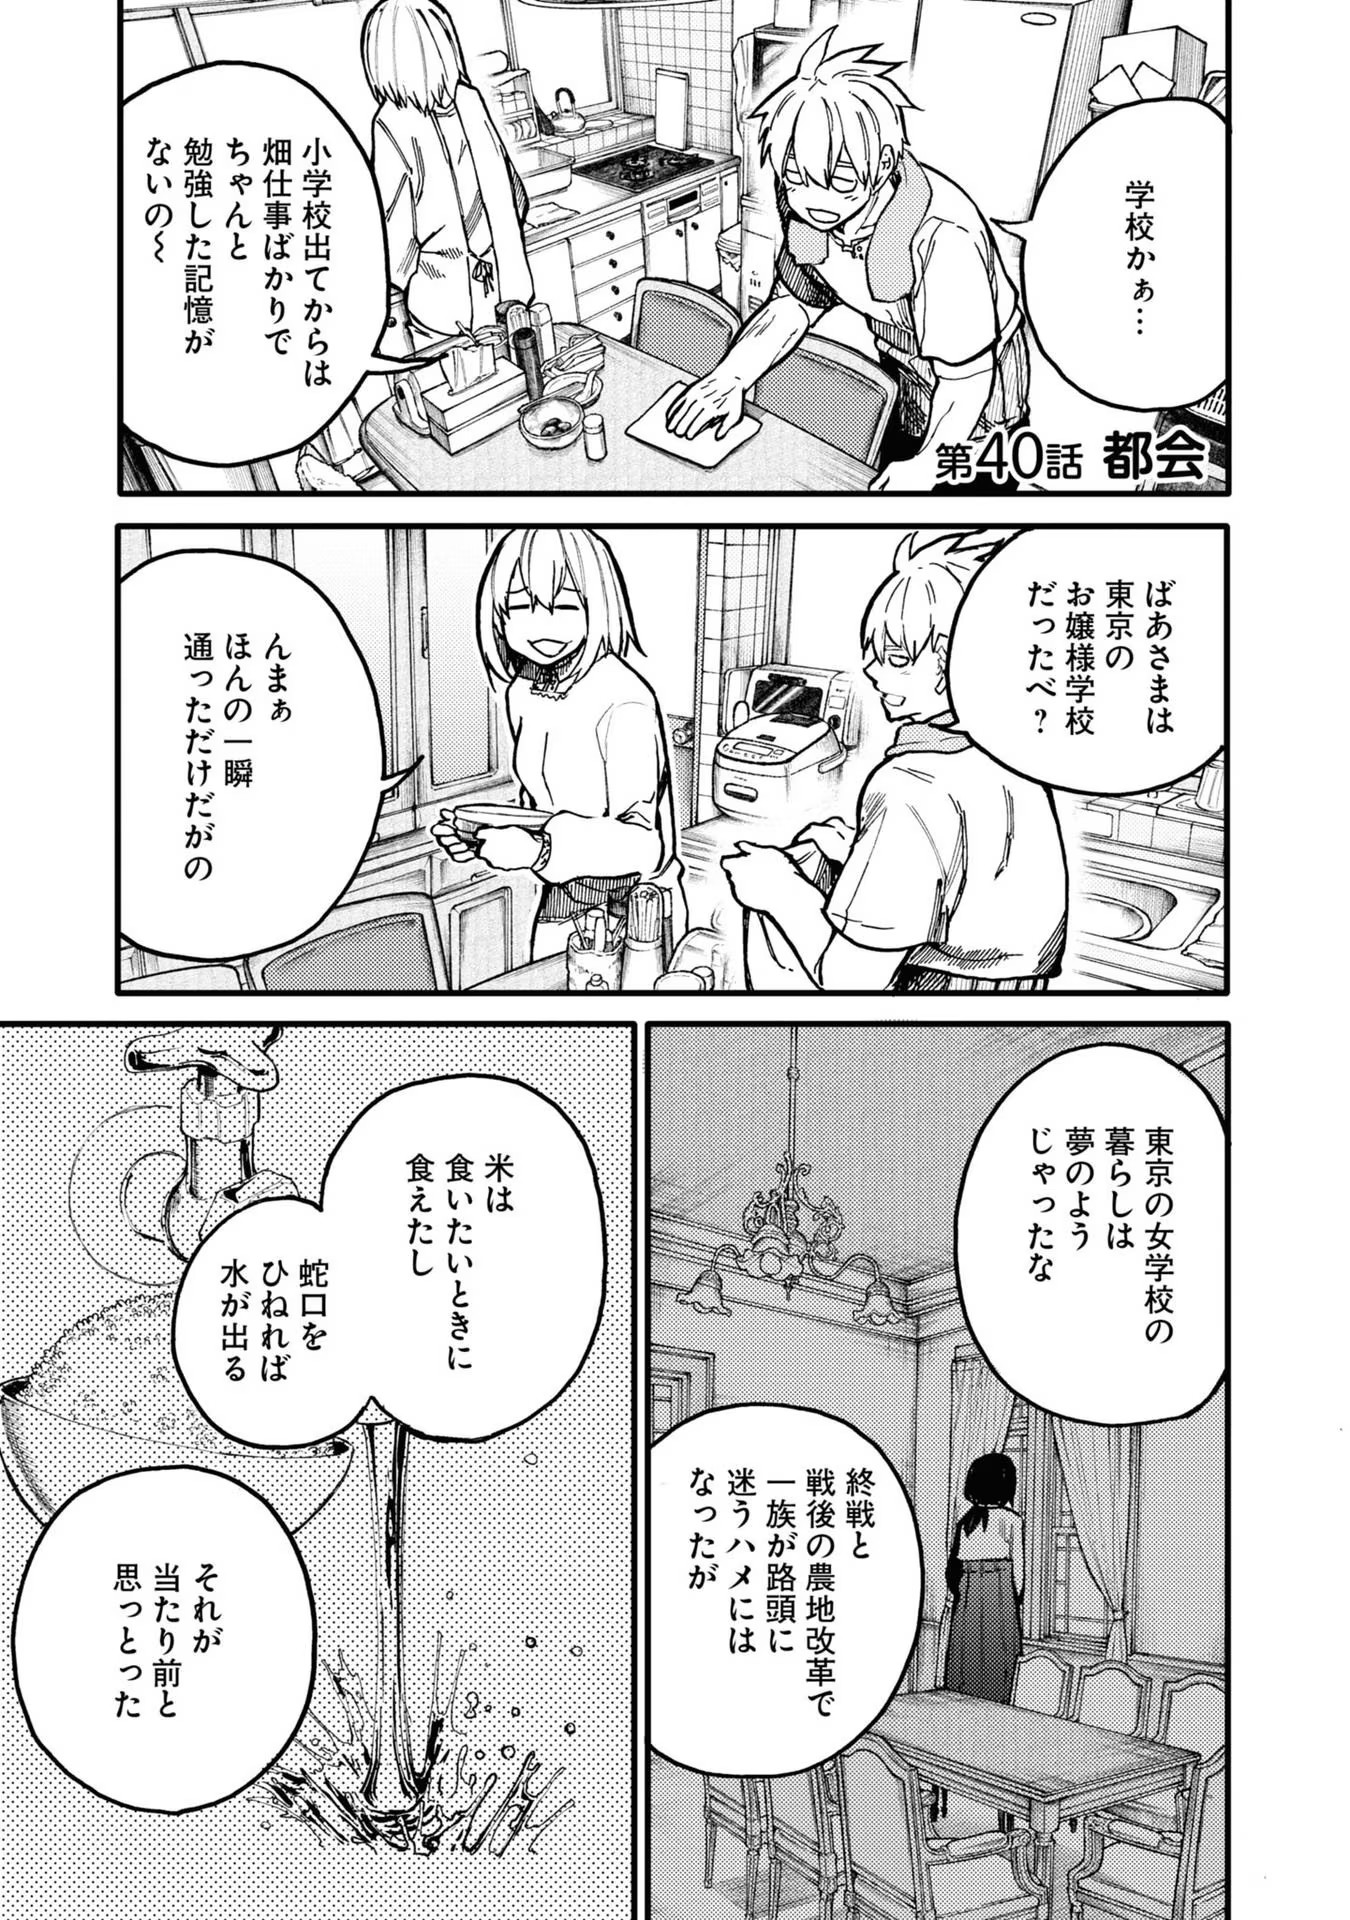 Ojii-san to Obaa-san ga Wakigaetta Hanashi - Chapter 40 - Page 1